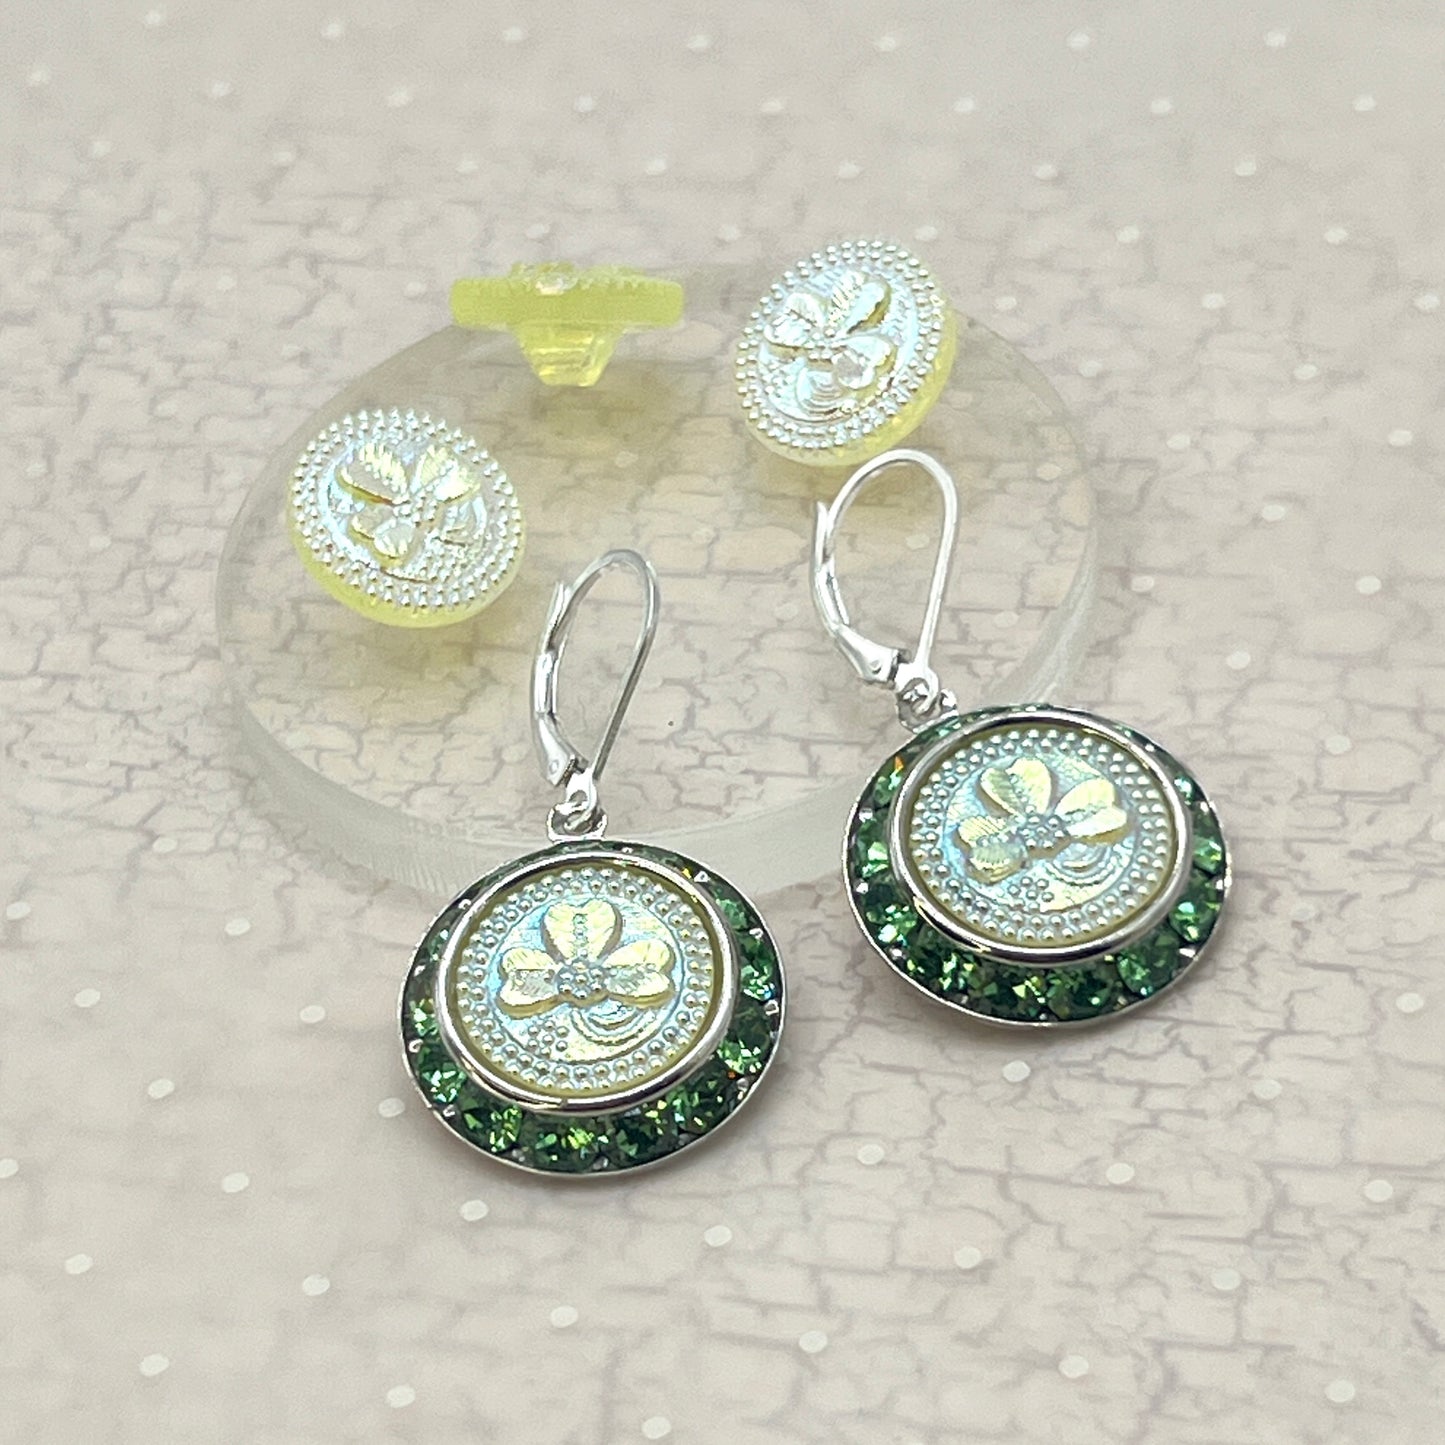 Irish Crystal Earrings, Uranium Glass Shamrock Buttons, Green St Patricks Day Jewelry, Gifts for Women